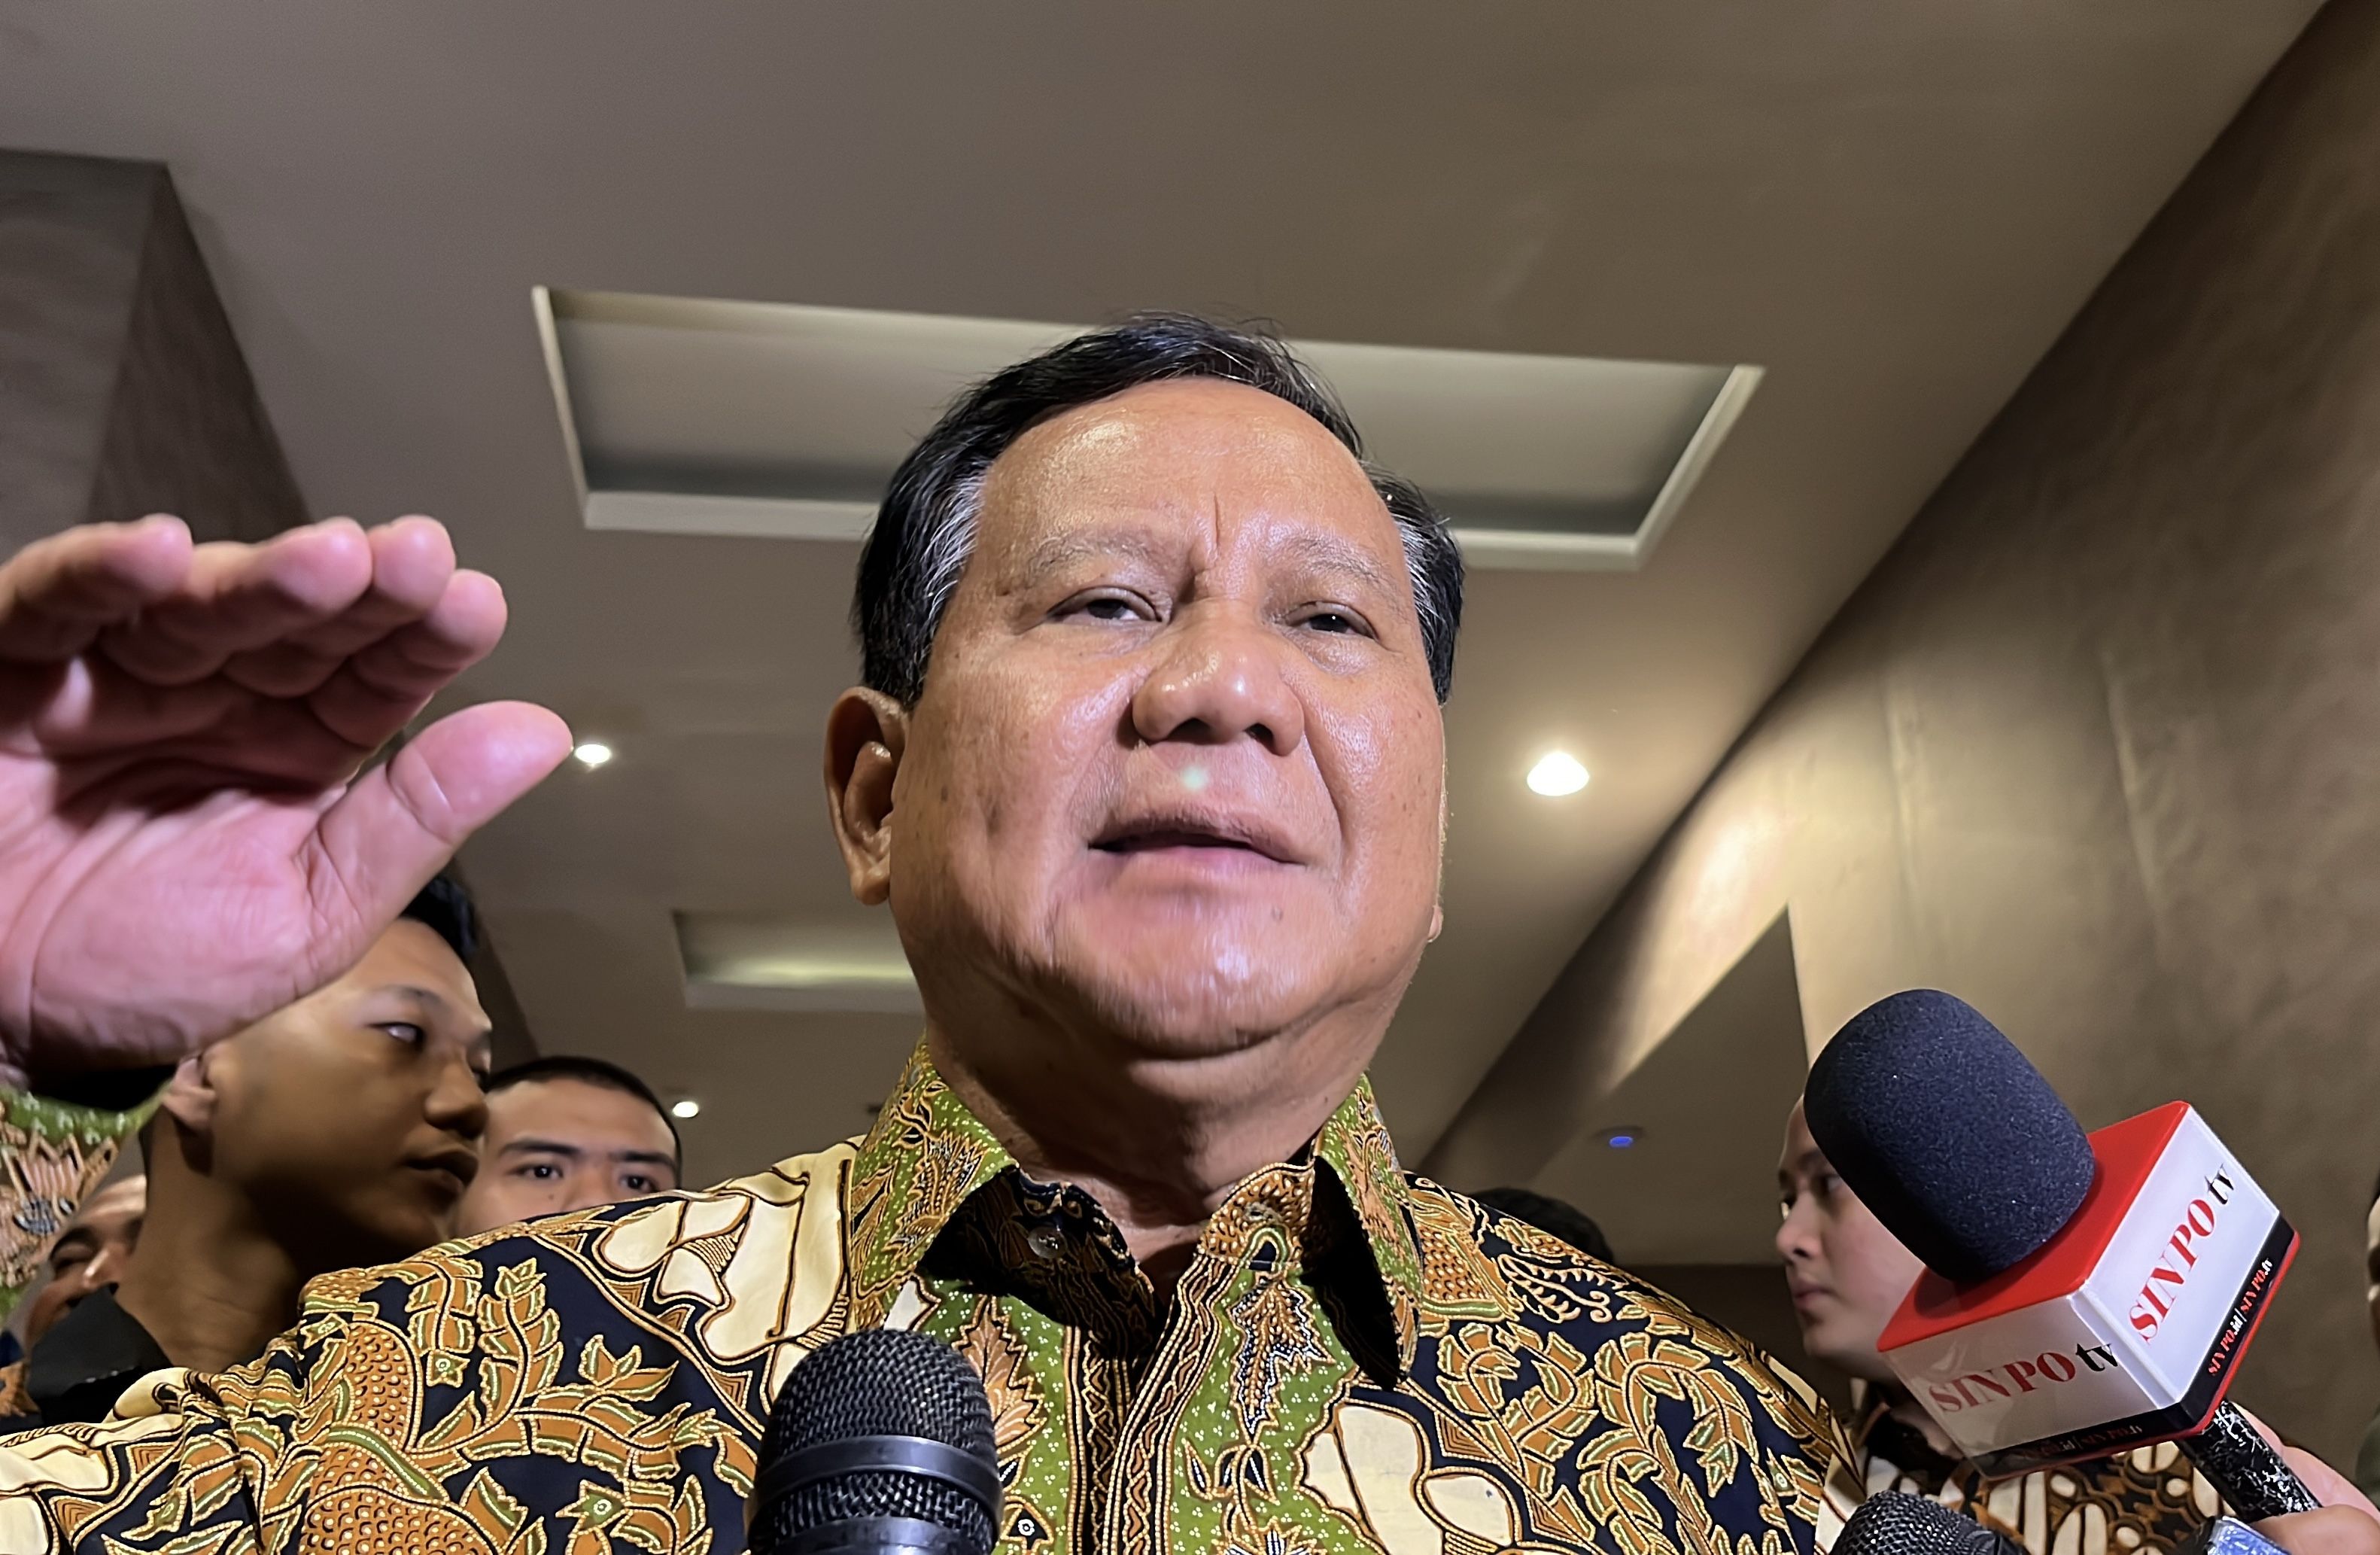 Survei Litbang “Kompas”: Prabowo Dianggap Paling Mampu Atasi Penegakan Hukum, Termasuk Kasus Korupsi